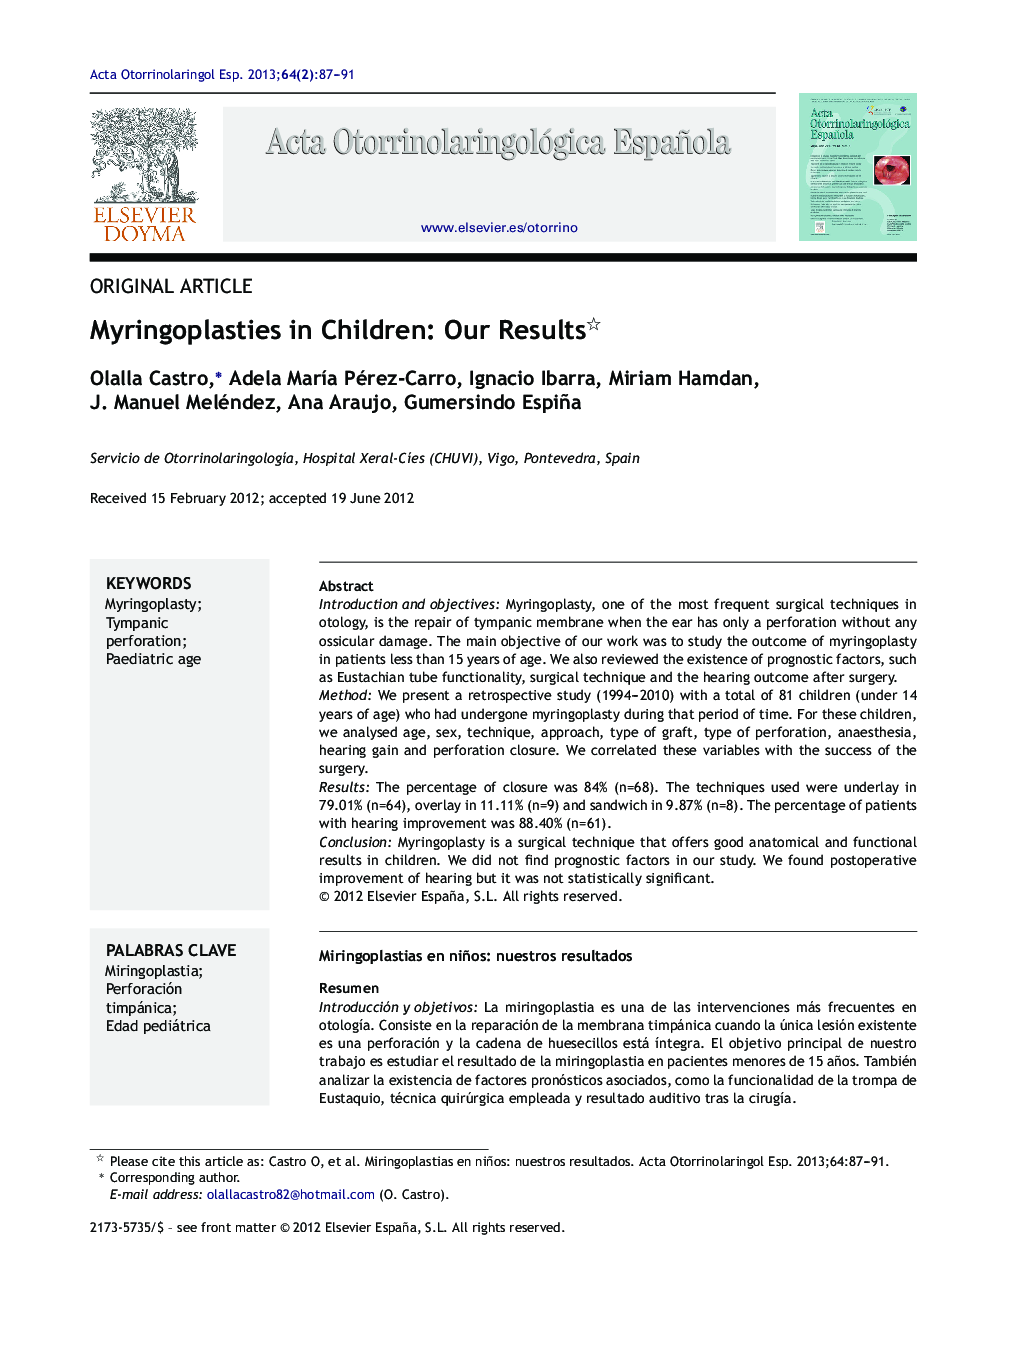 Myringoplasties in Children: Our Results 